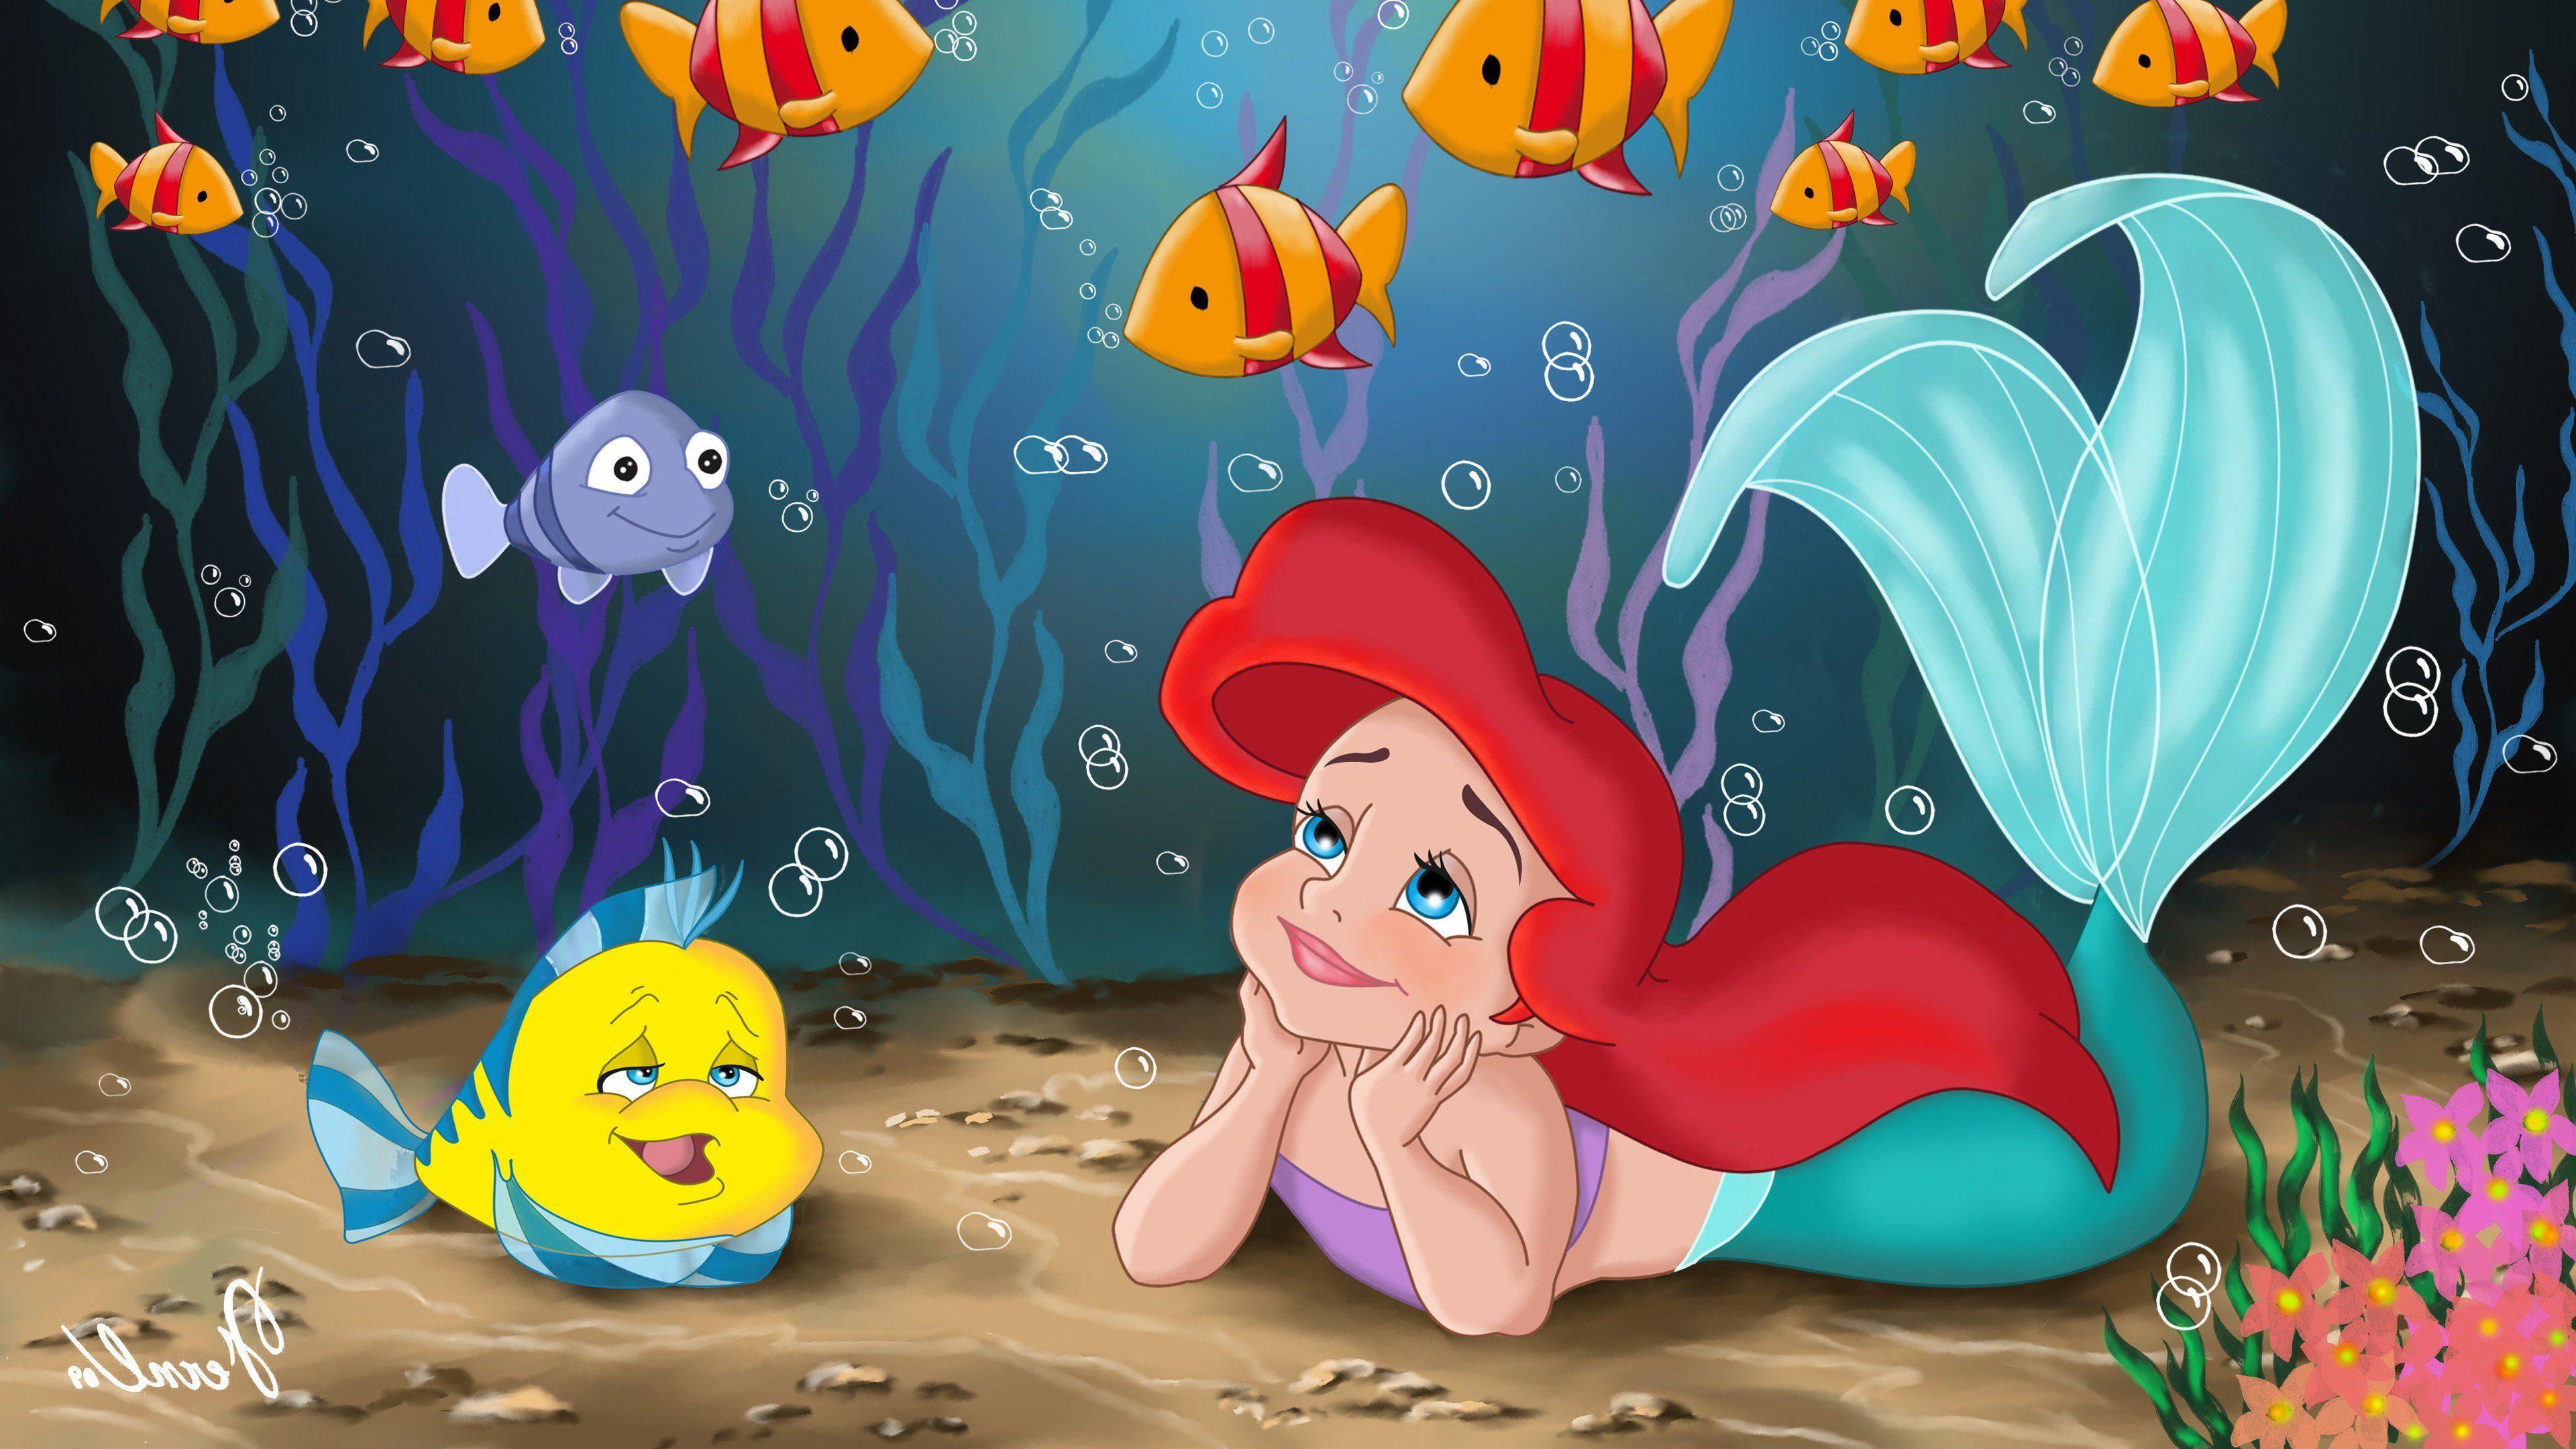 Little Mermaid Wallpapers - Top Free Little Mermaid Backgrounds ...